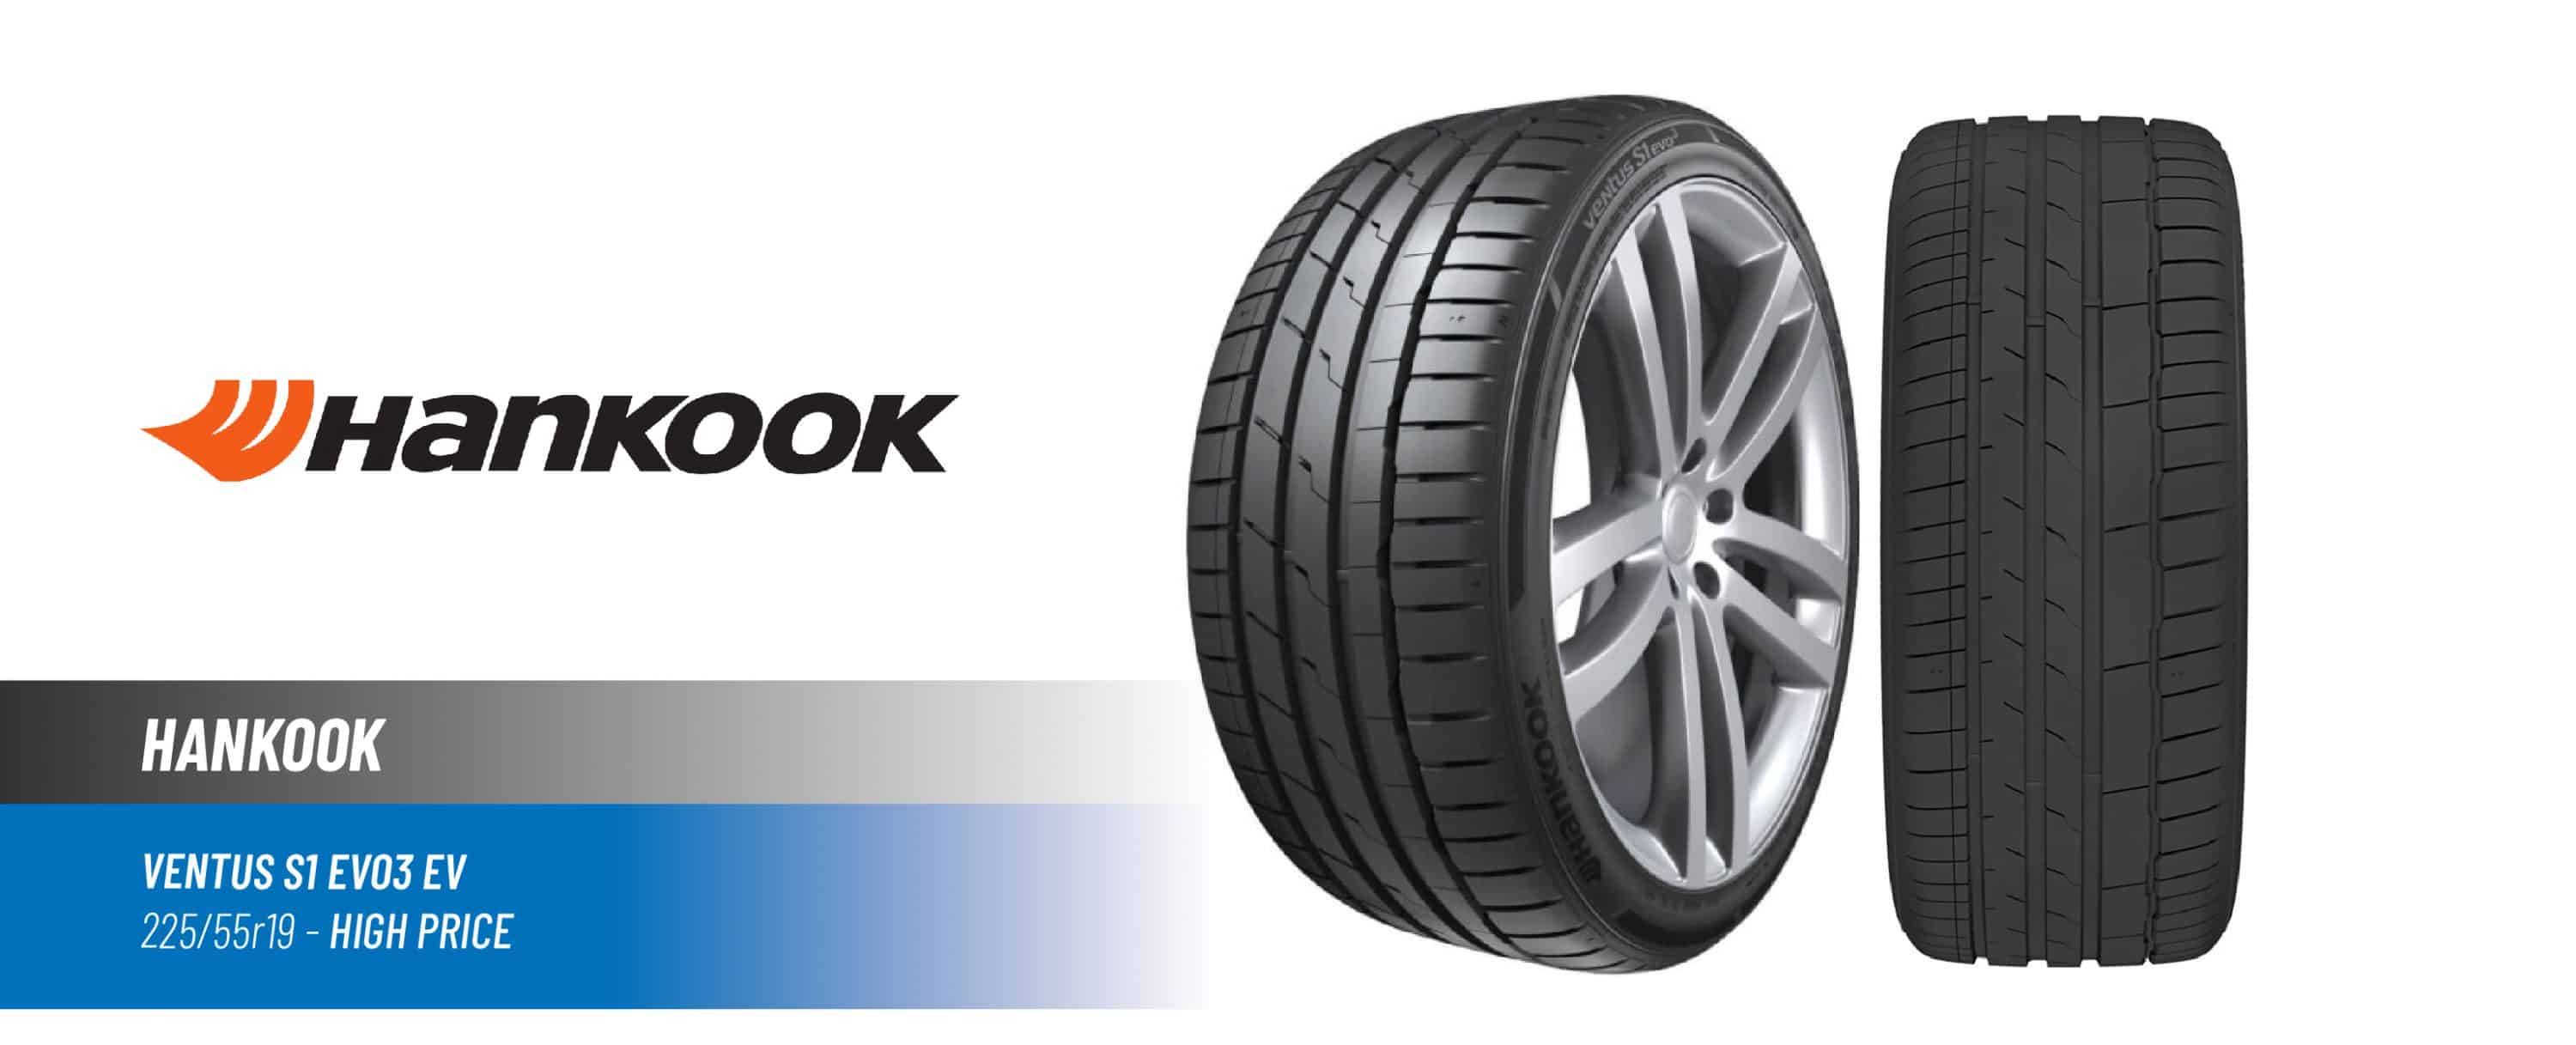 Top#1 High Price: Hankook Ventus S1 EVO3 EV – best 225/55r19